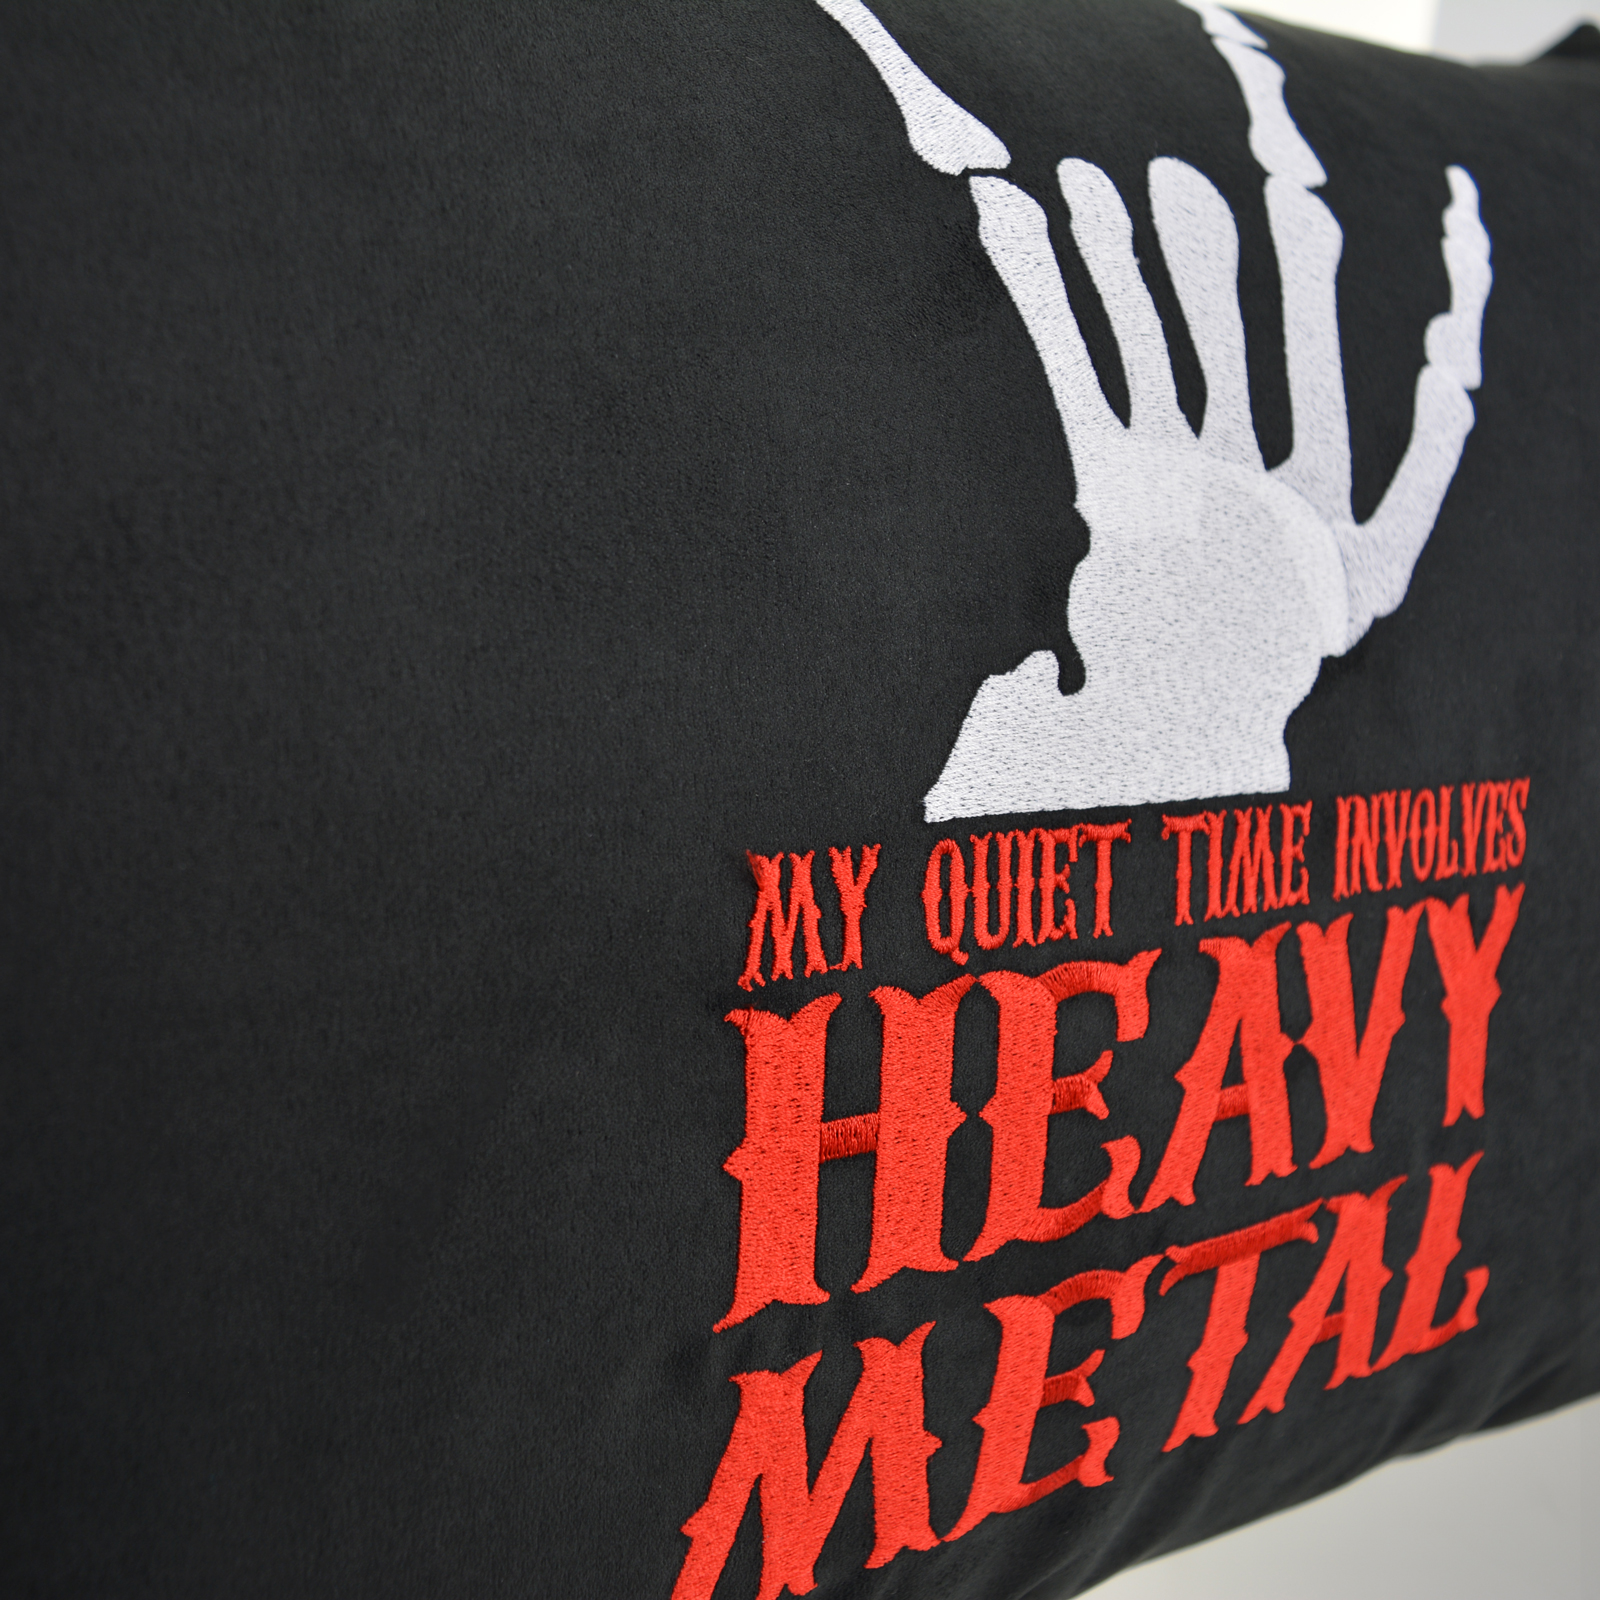 My quiet time involves heavy metal - Kissen